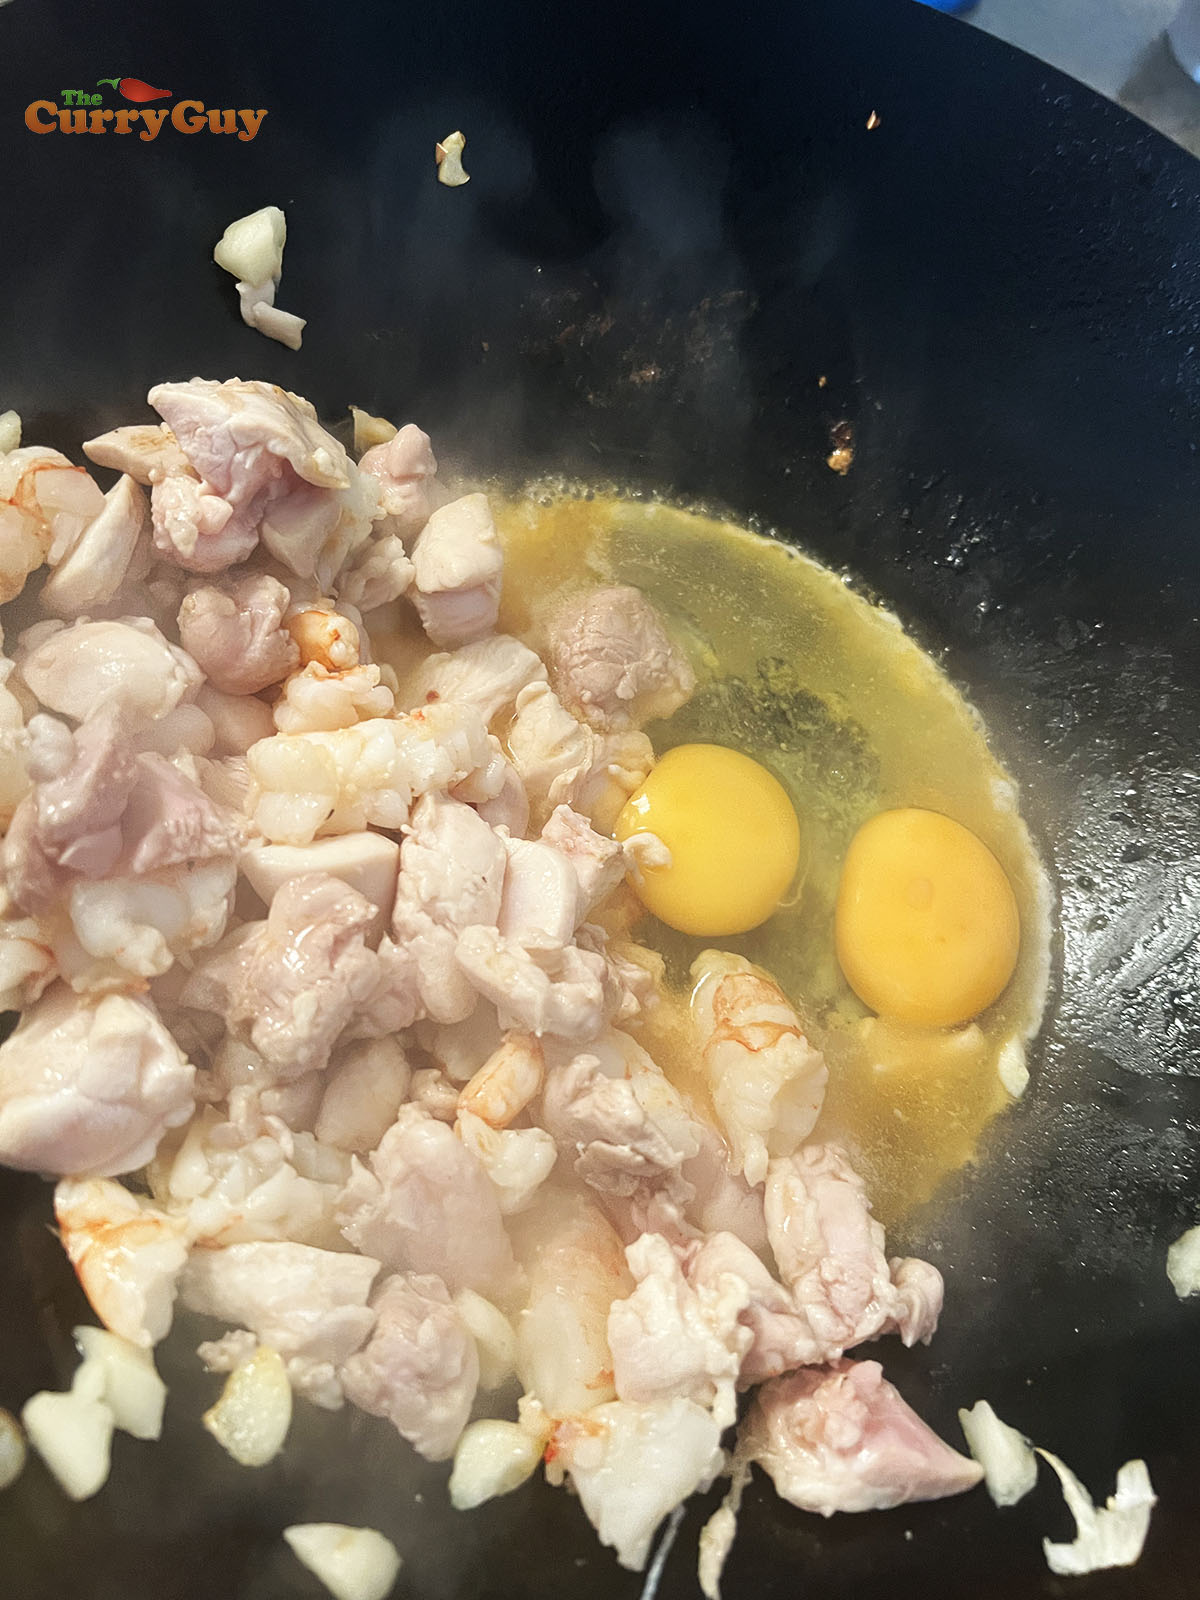 Adding eggs to the wok